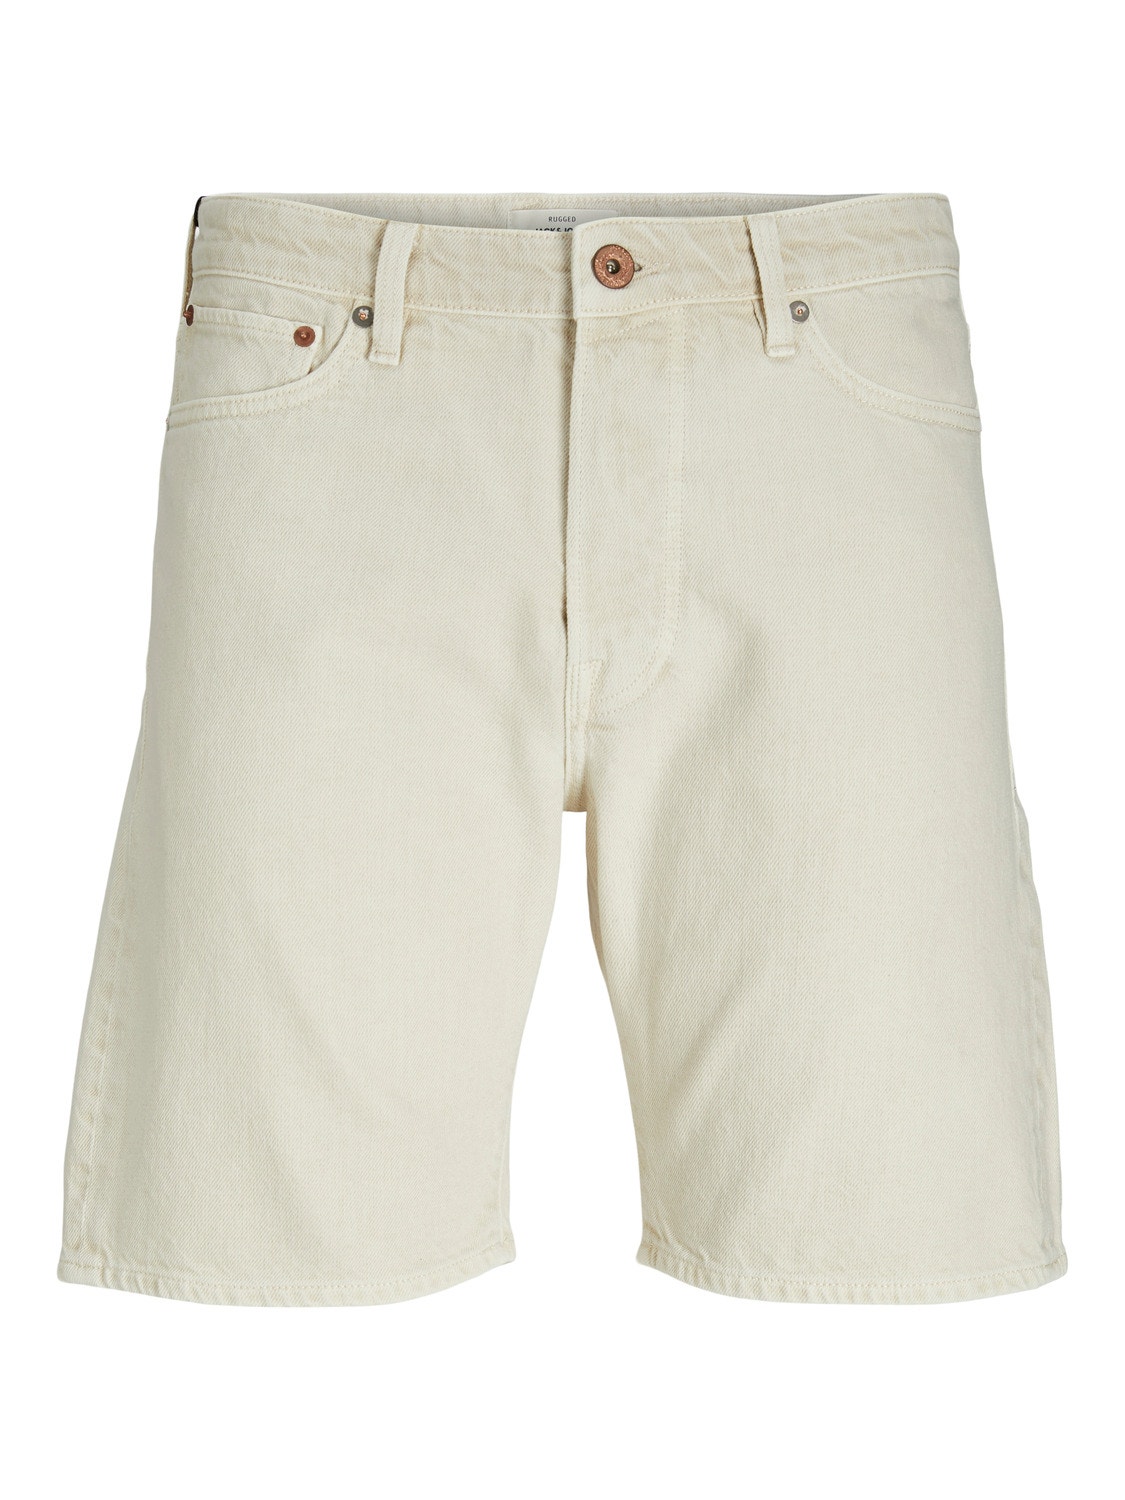 Jack & Jones Relaxed Fit Jeans Shorts -Ecru - 12229575